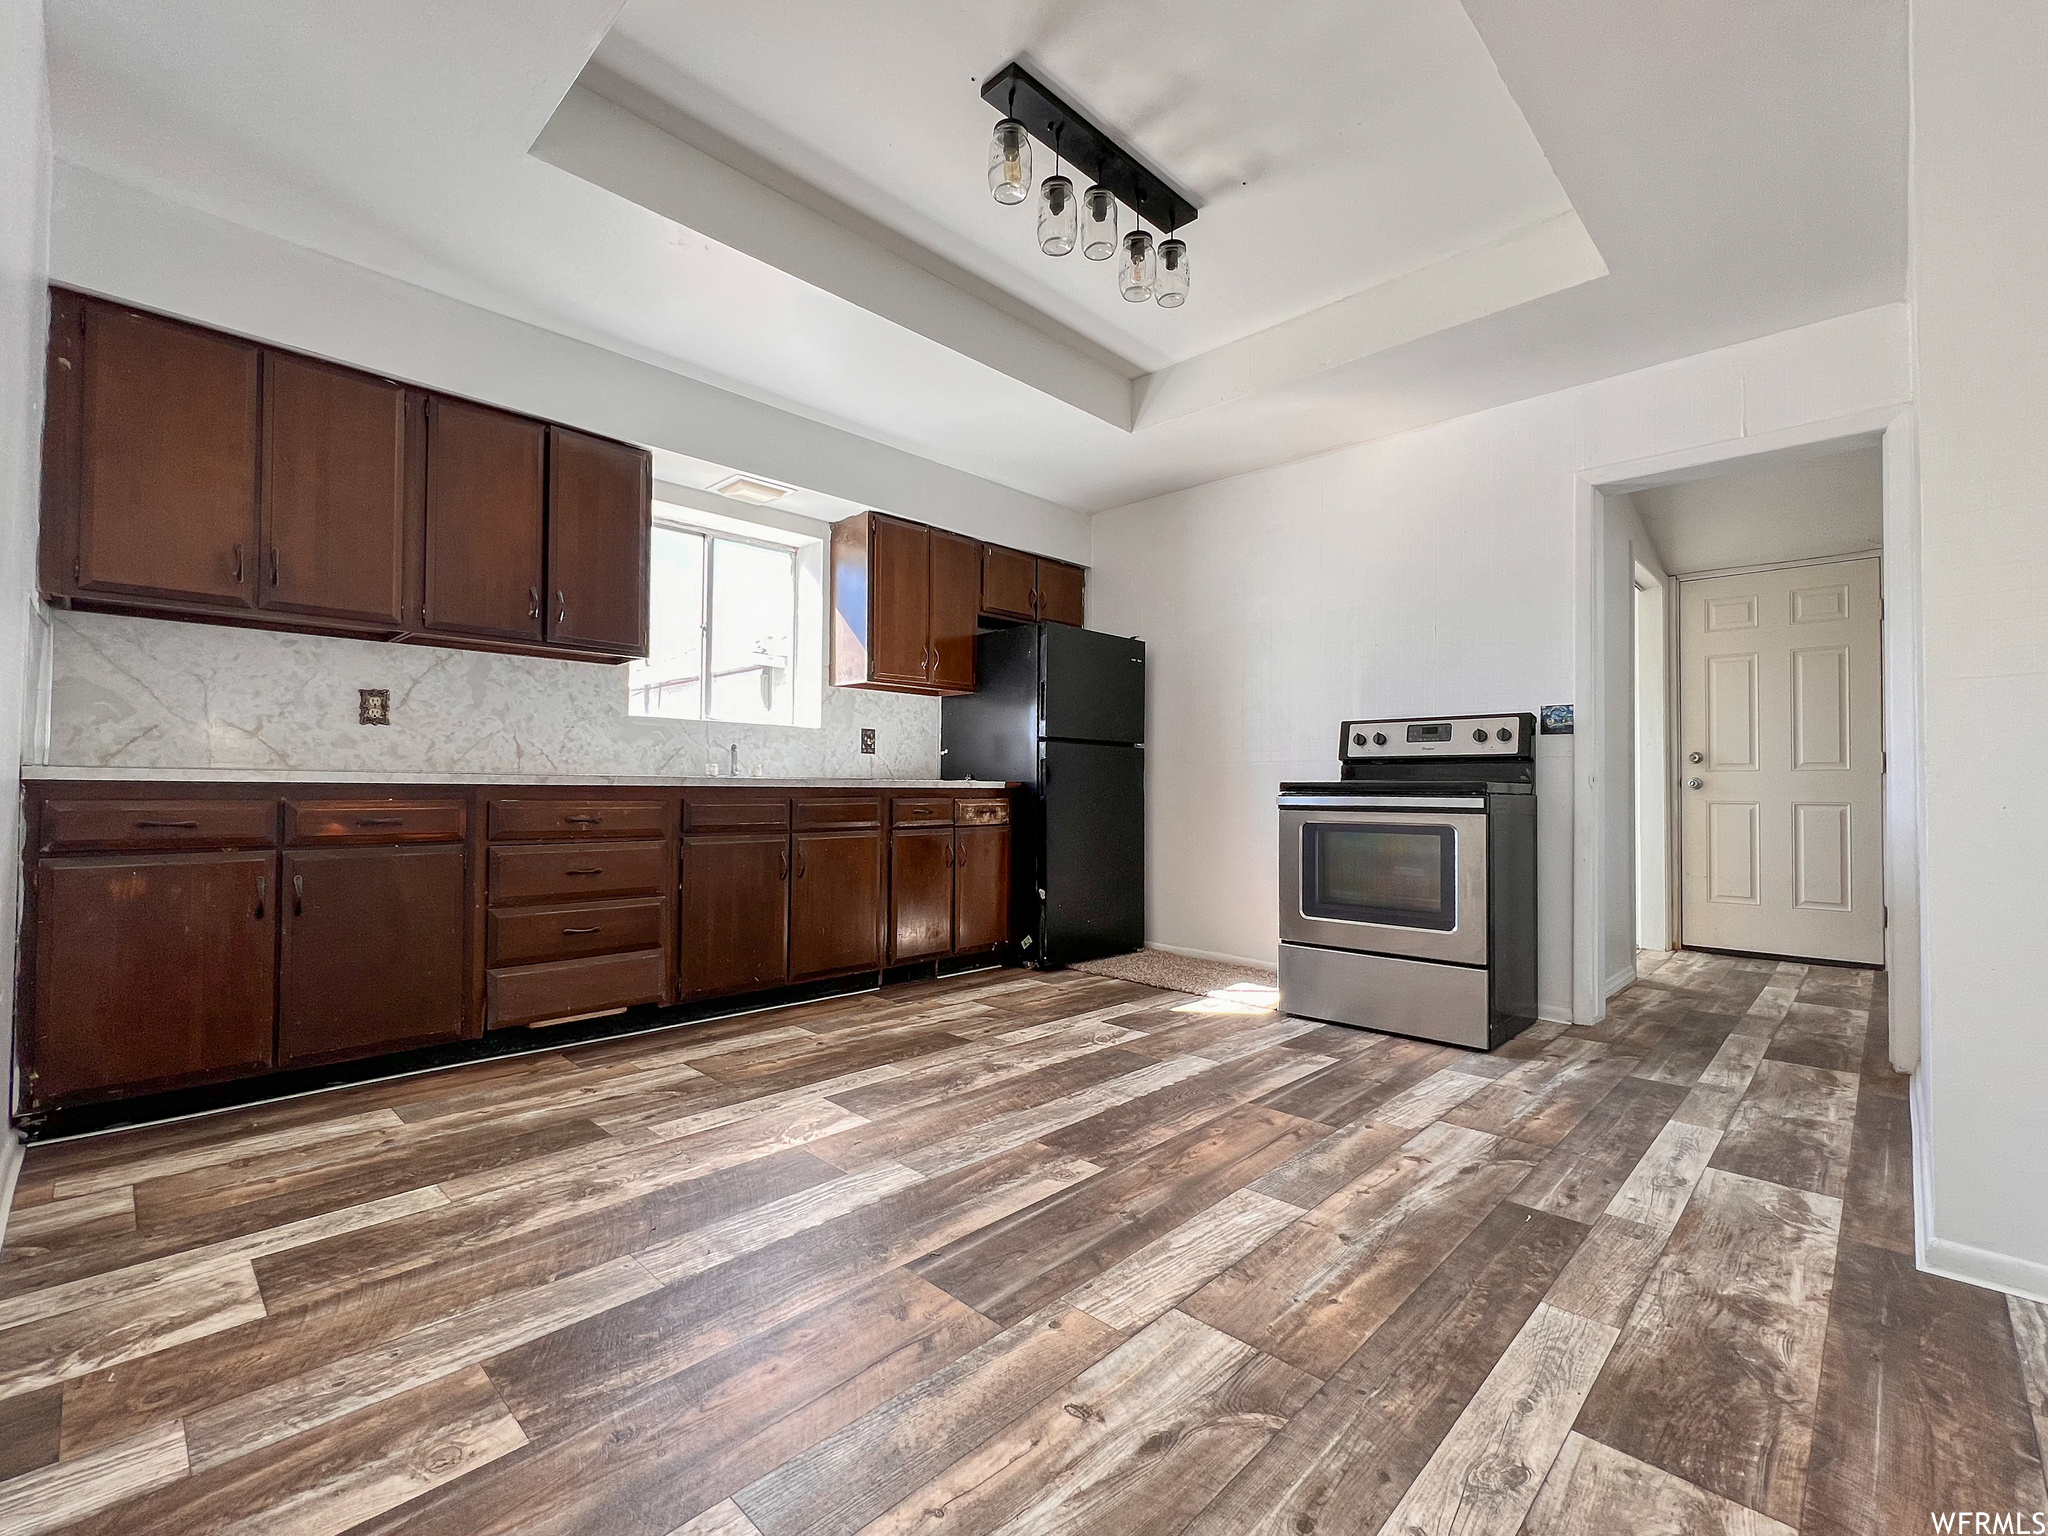 Kitchen featuring natural light, range oven, stainless steel refrigerator, dark flooring, and dark brown cabinetry